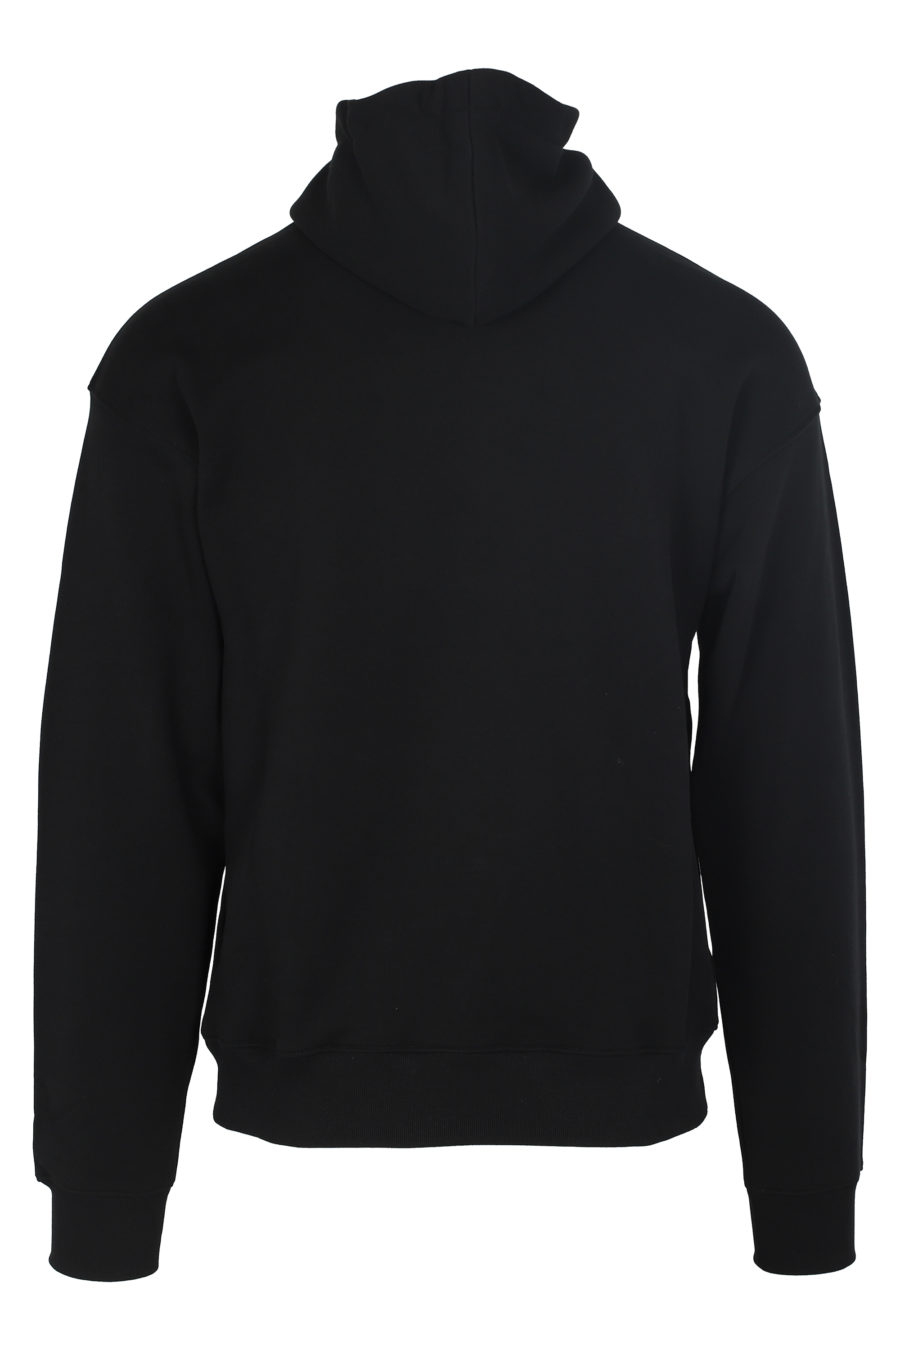 Sudadera negra con capucha "Couture" - IMG 6025